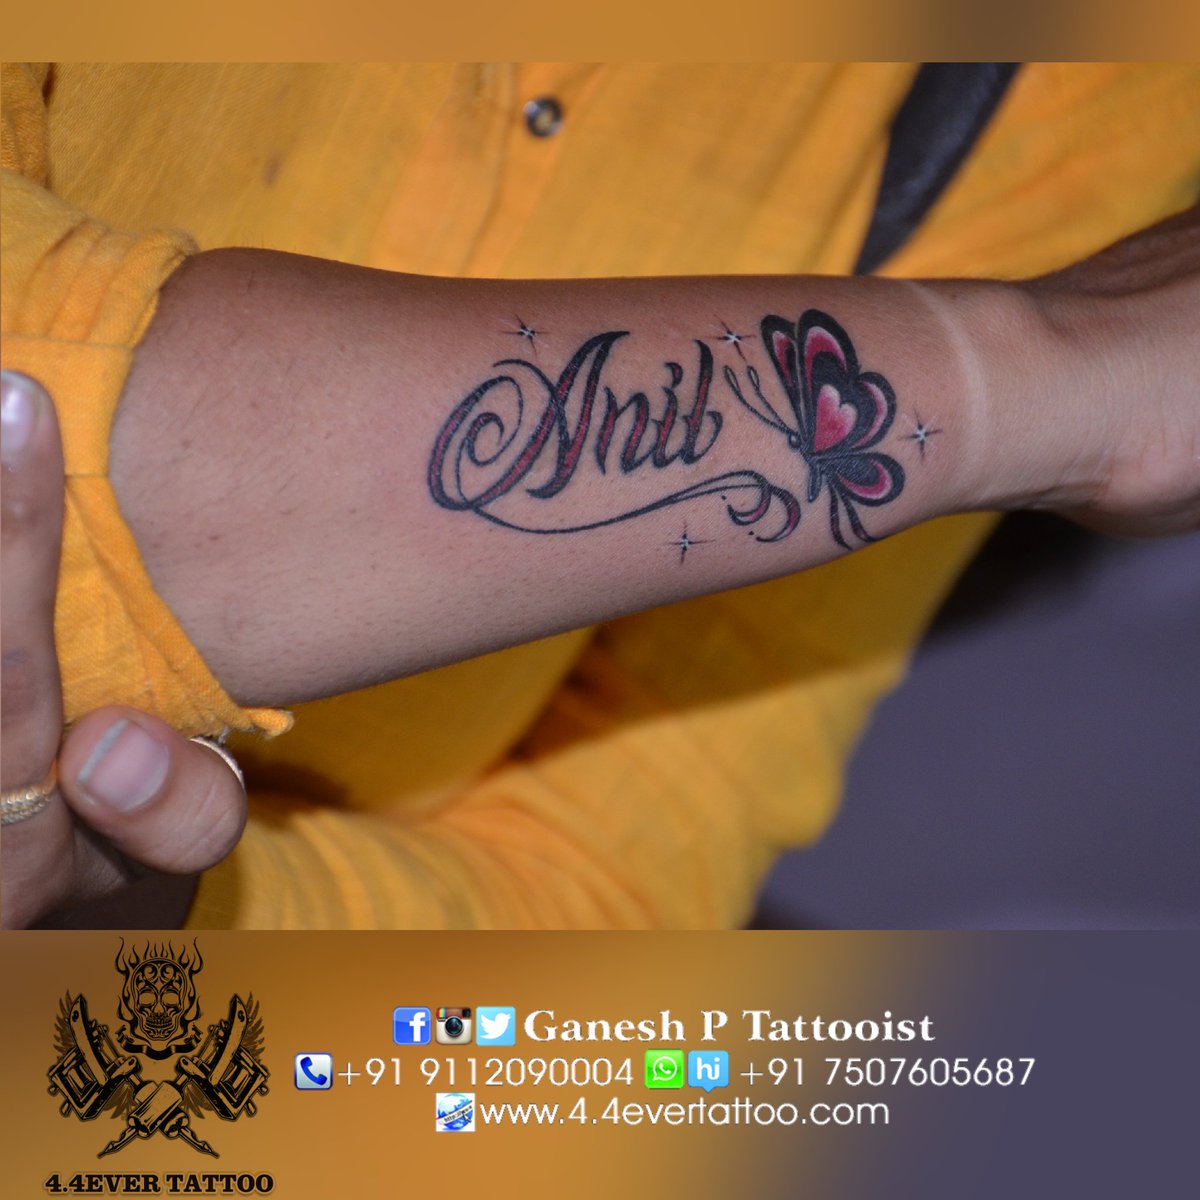 Ganesh P Tattooist on Twitter femal tattoo Anil Lettering with  butterflytattoo tattoo By Ganesh Panchal tattooist nandedcity  httpstcouk1inDjHXN 2017 httpstco29SsfuPPUy  Twitter